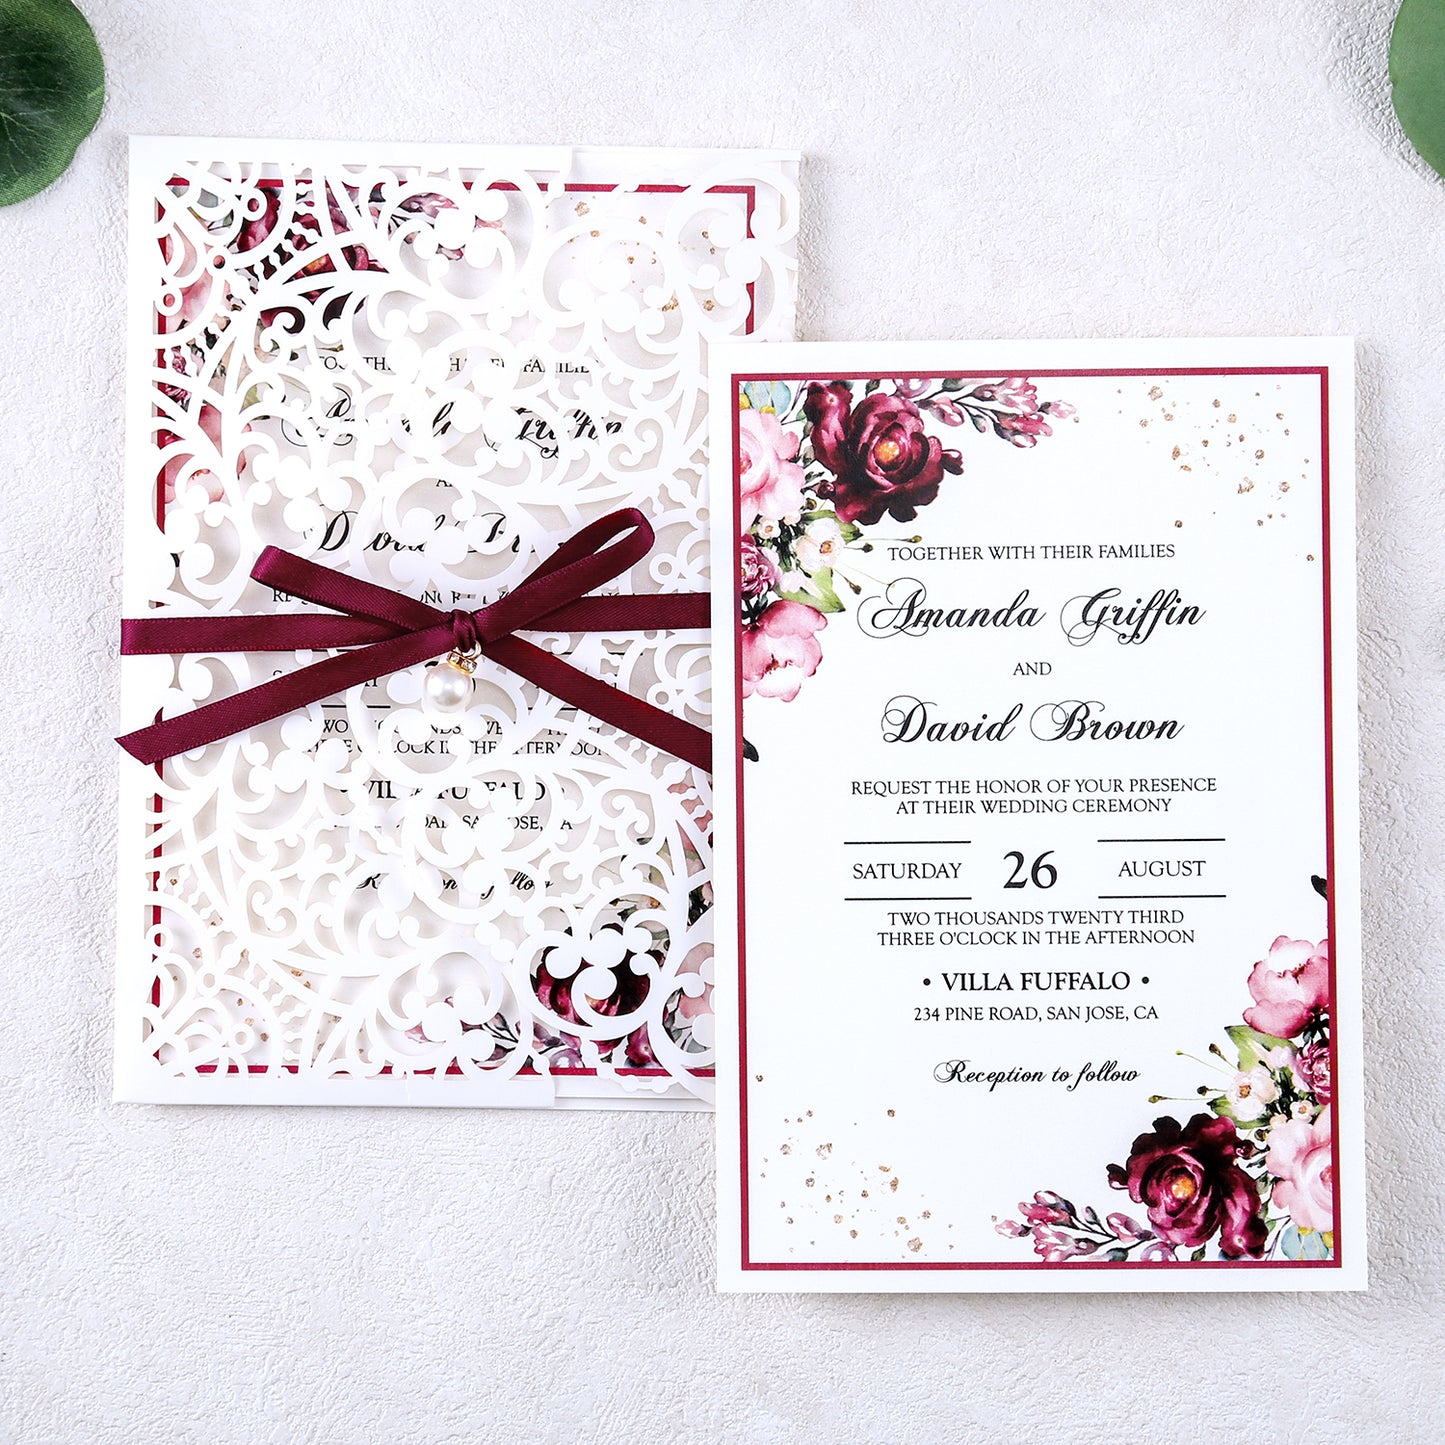 5 X 7.2" Laser Cut Hollow Rose Wedding invitations Cards With Burgundy Ribbon And Envelopes For Wedding Bridal Shower Engagement - DorisHome